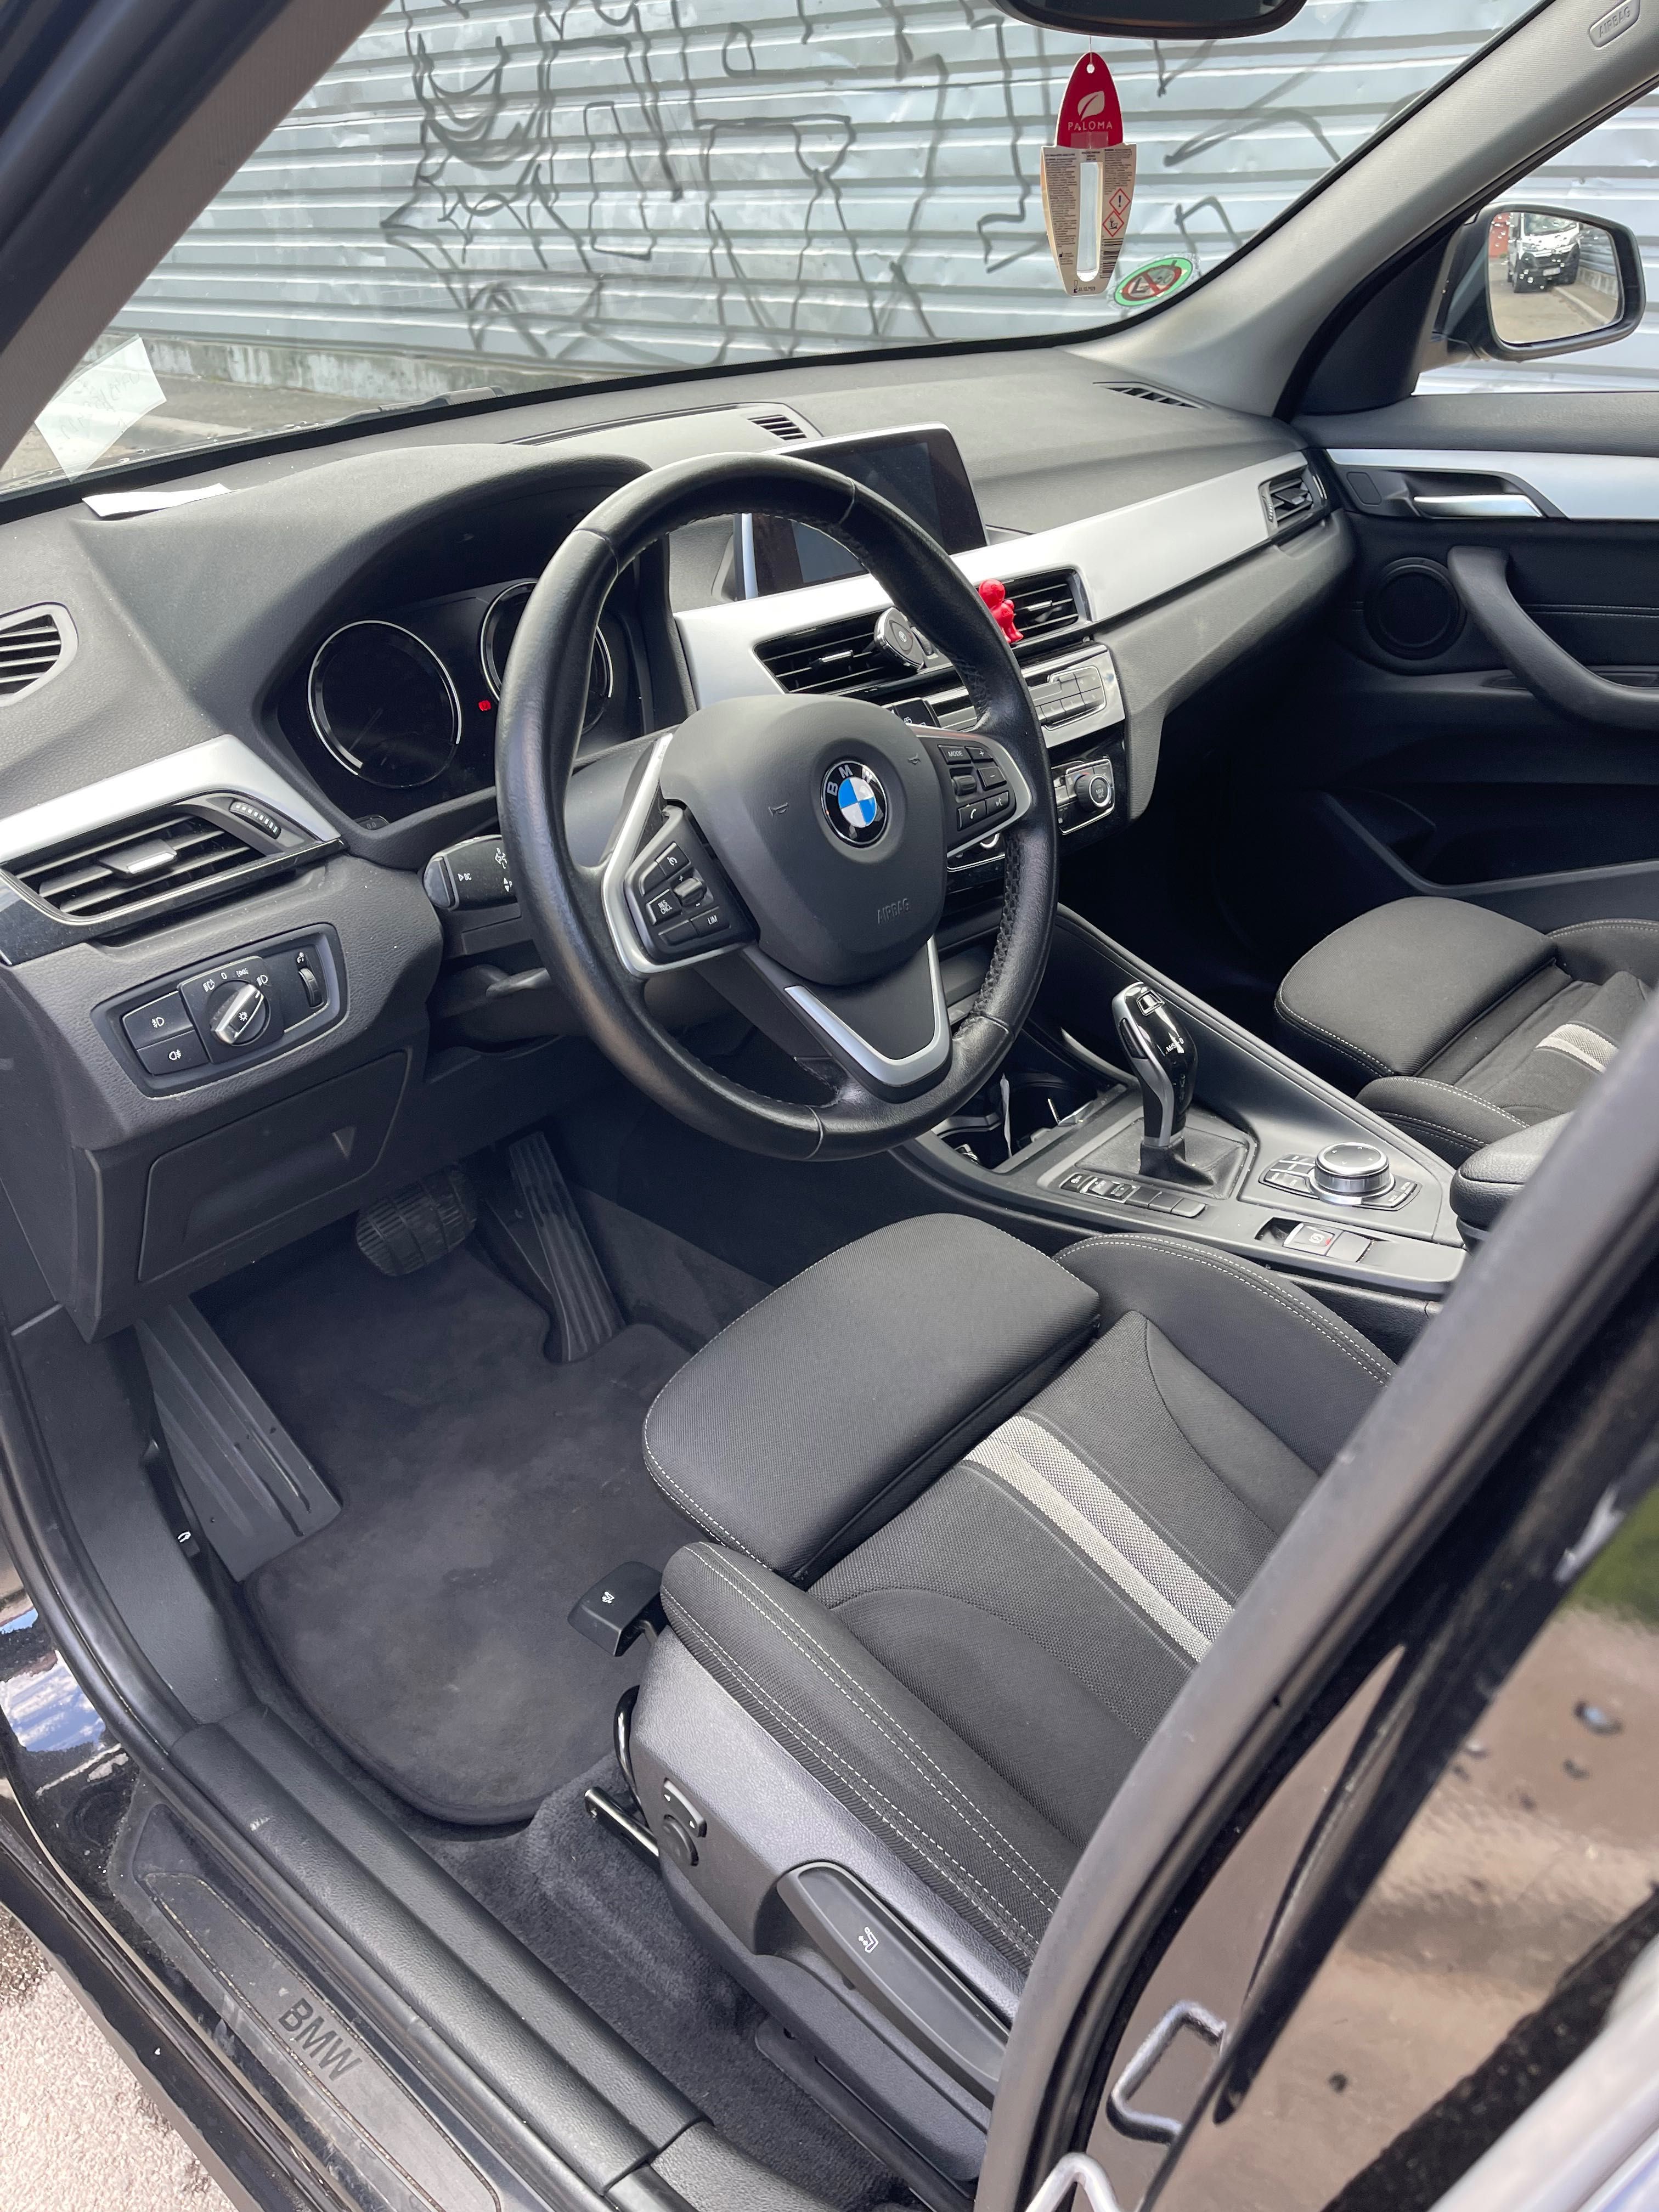 BMW X1-2.0 diesel Automat/14990+tva